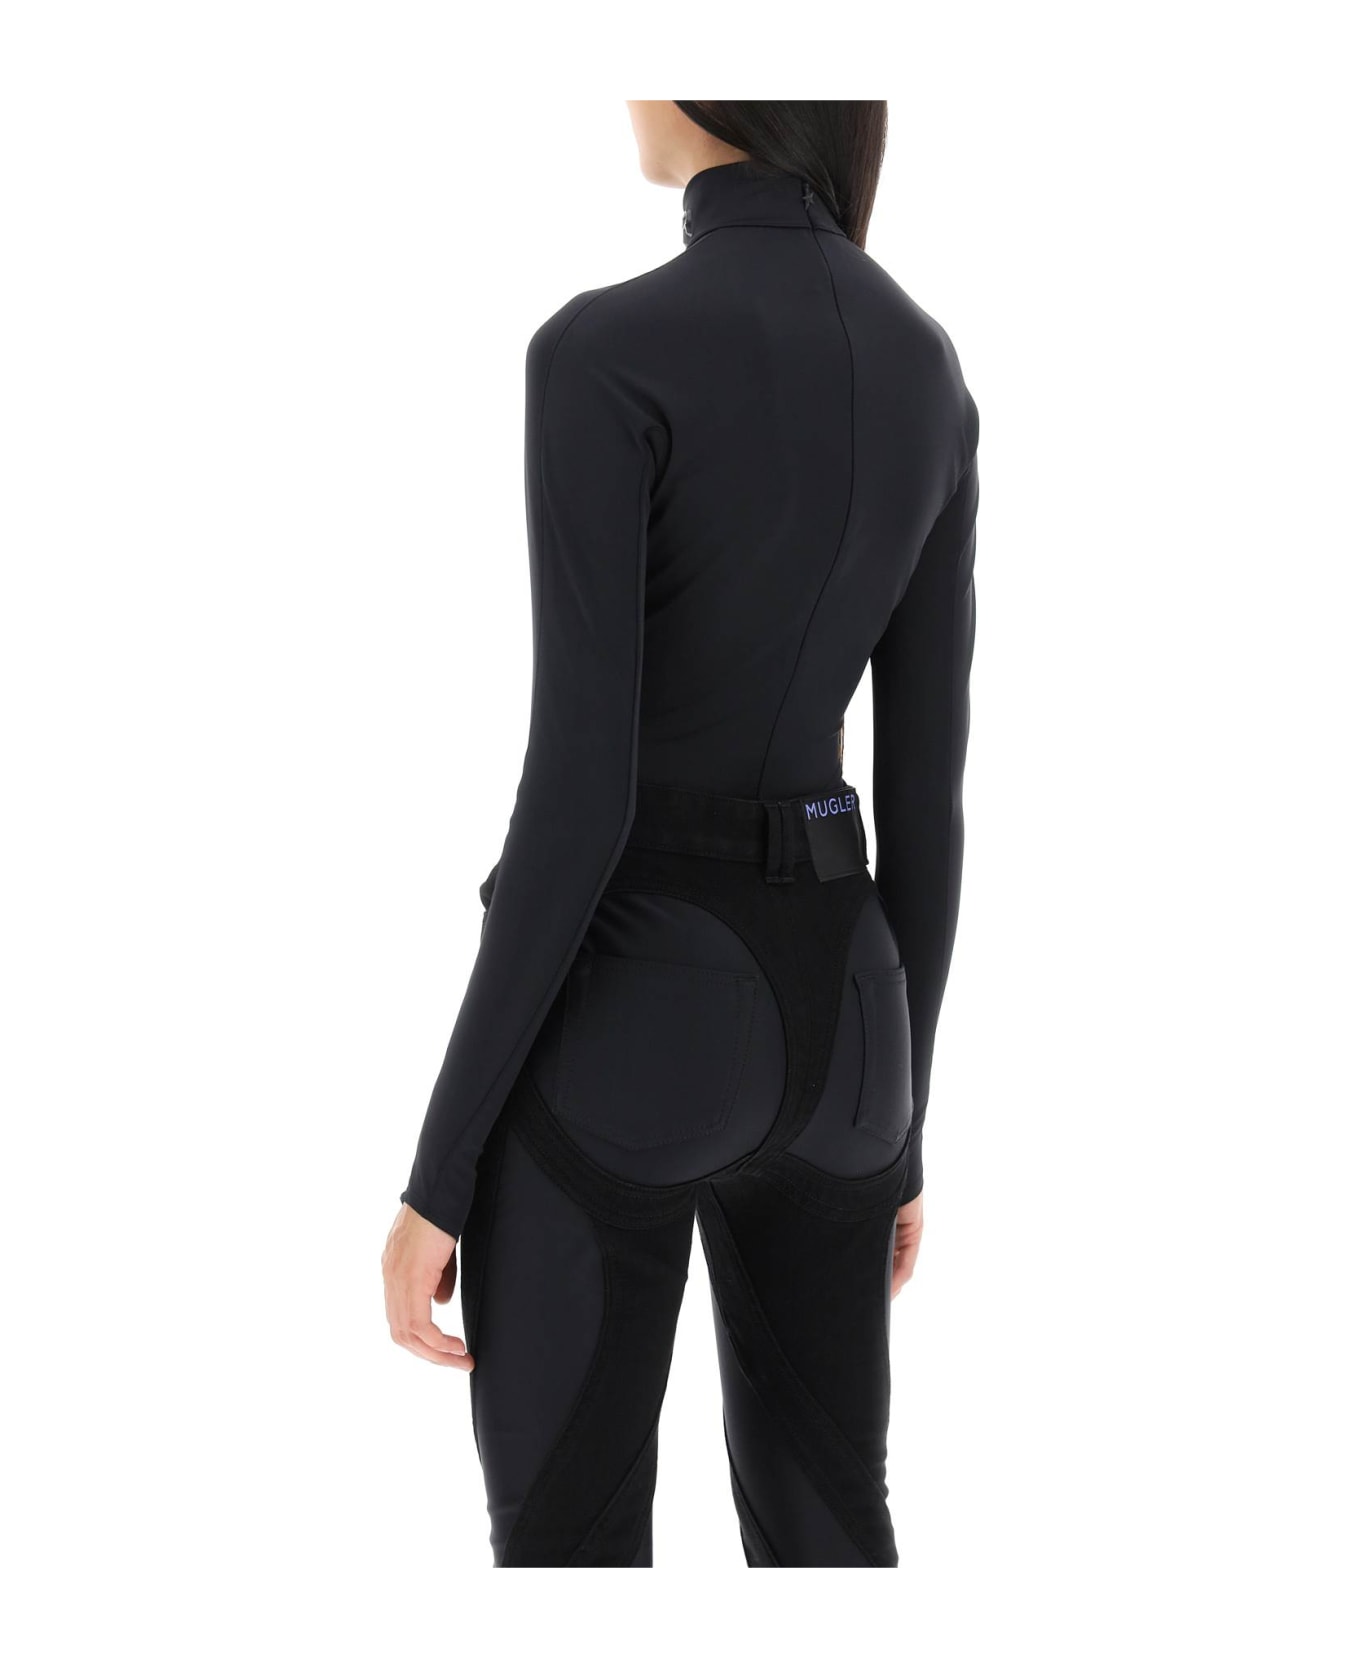 Mugler Bodysuit With Stand Collar - BLACK (Black) ボディスーツ